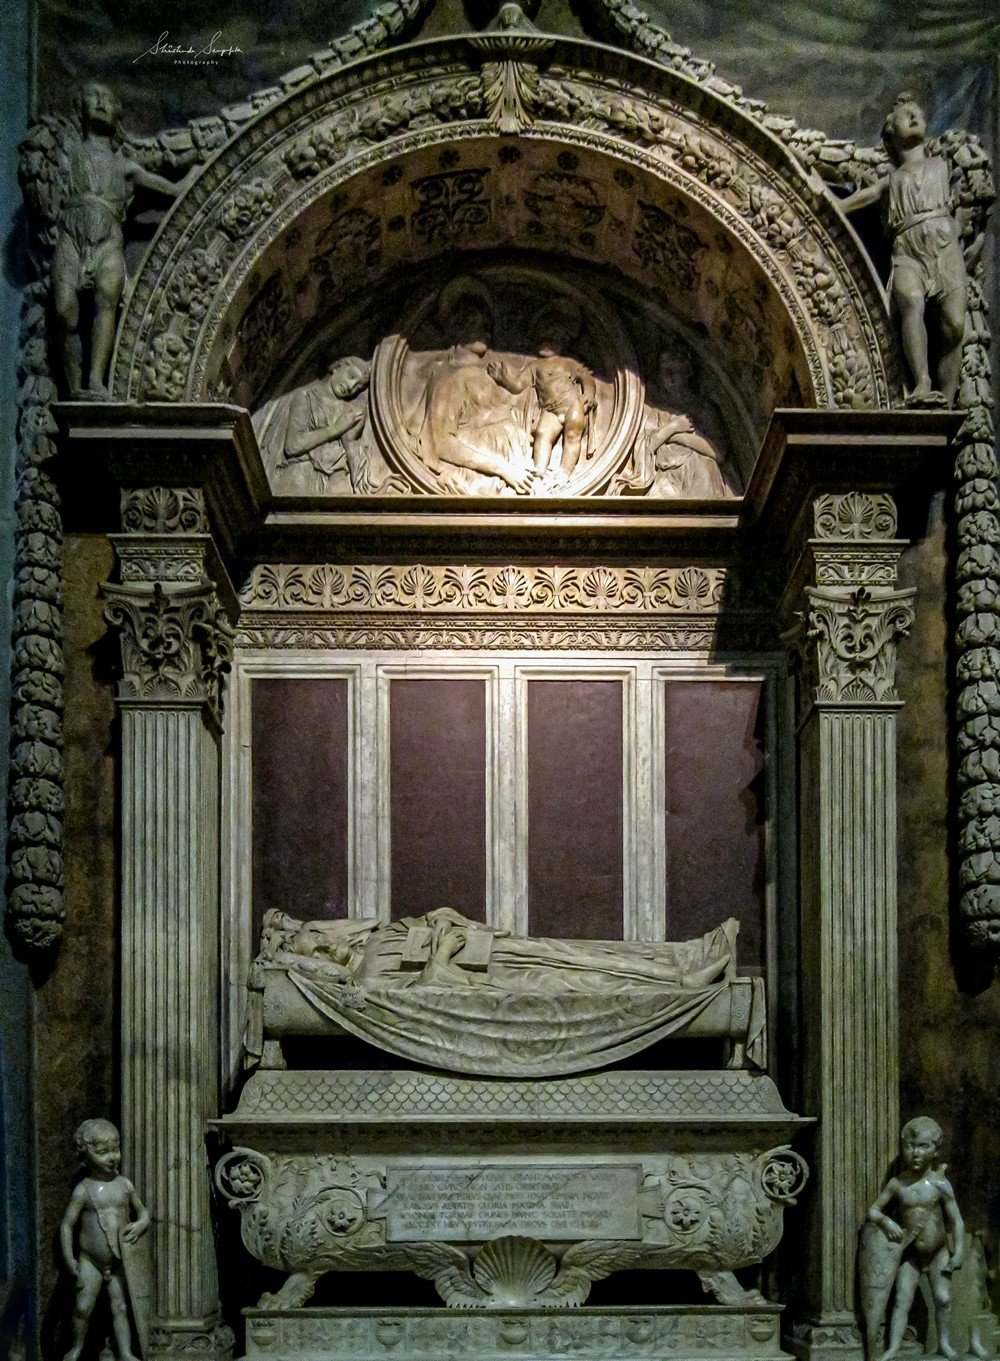 Funerary Monument of Carlo Marsuppini at basilica di santa croce church in florence tuscany italy shot in summer